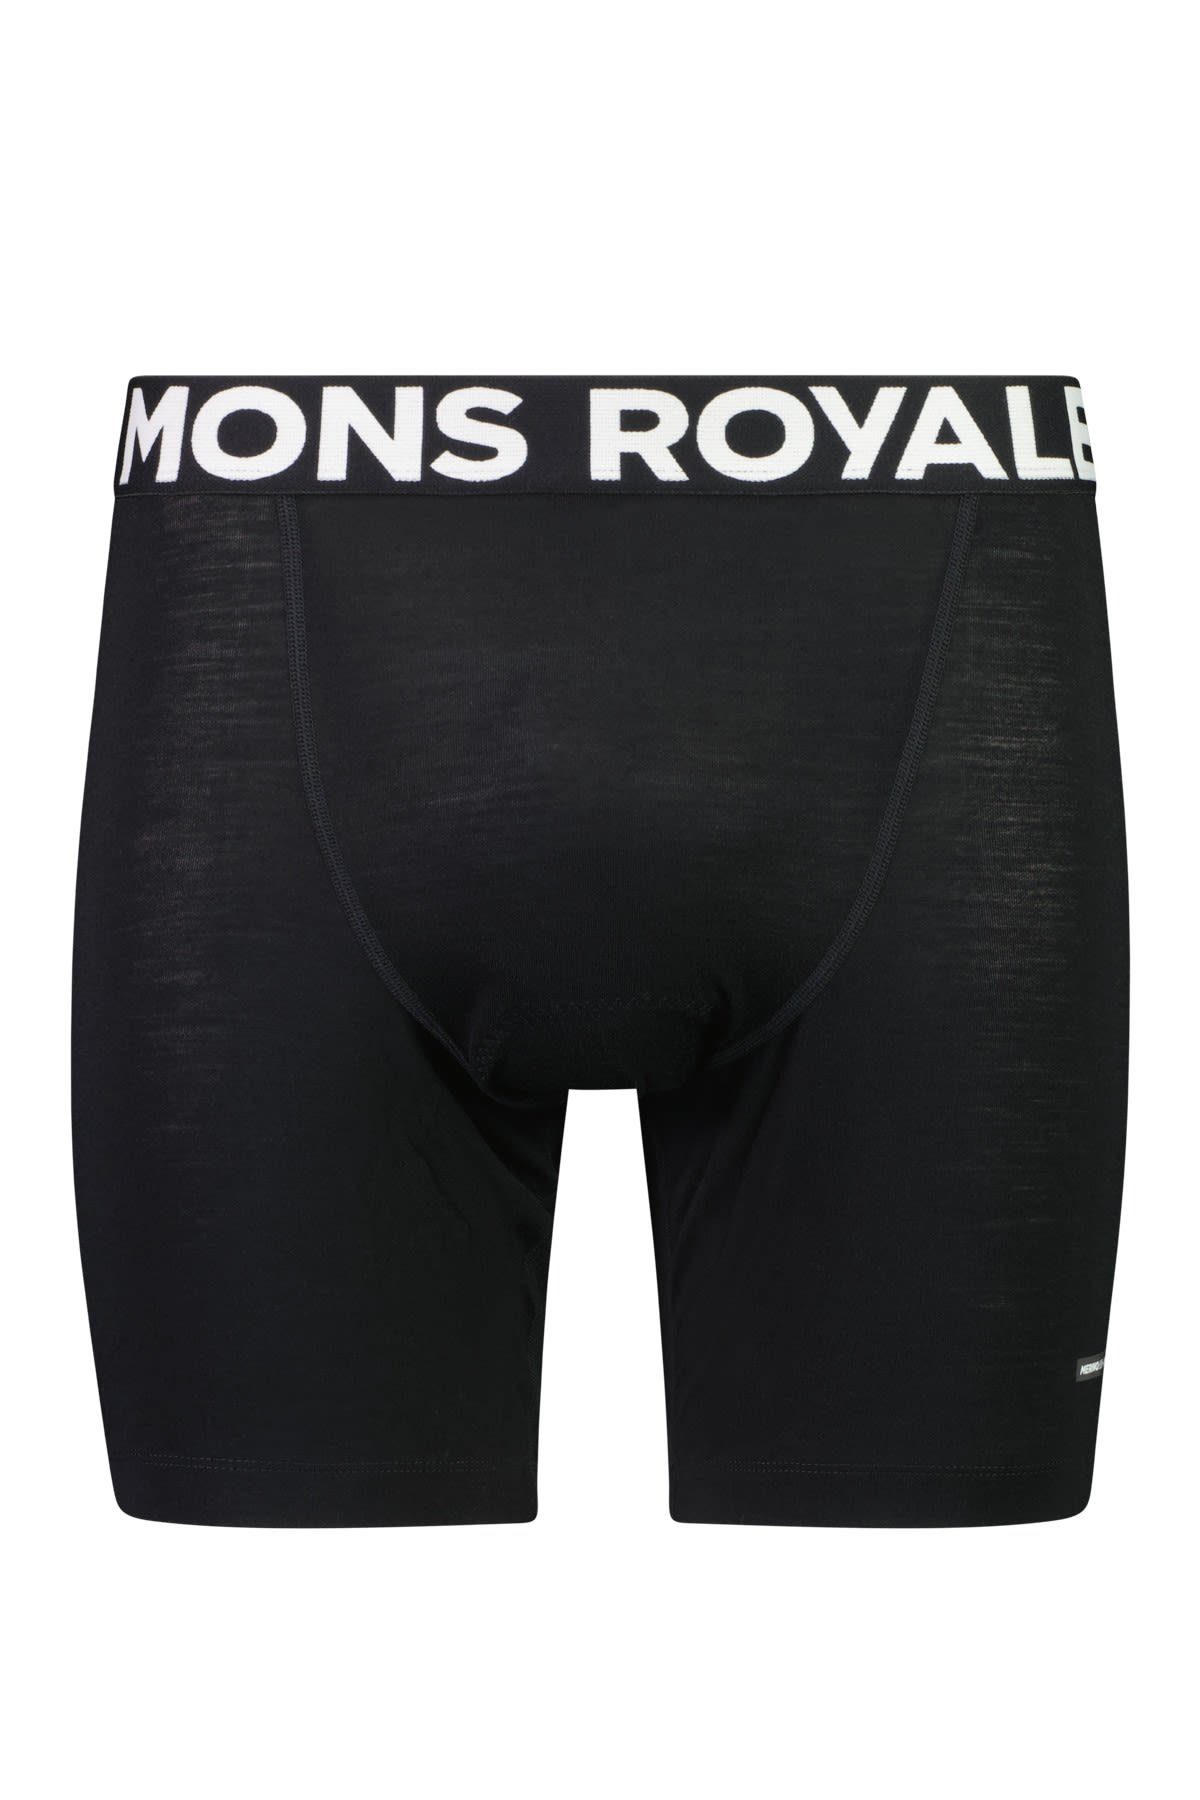 Mons Royale Lange Unterhose Black